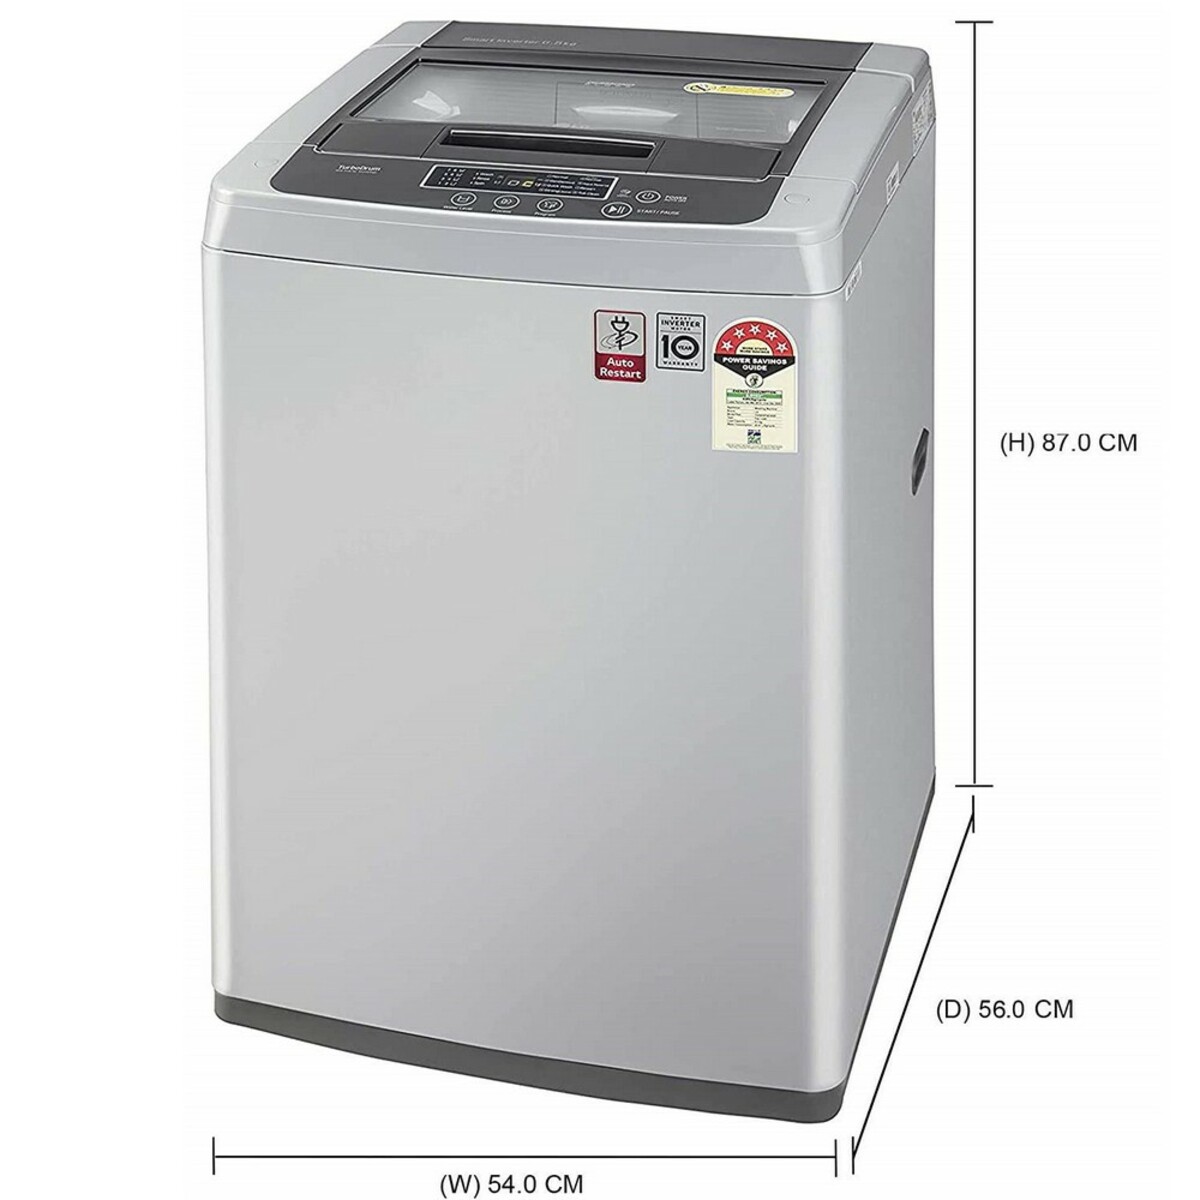 LG Fully Automatic Washing Machine T65SKSF4Z 6.5KG